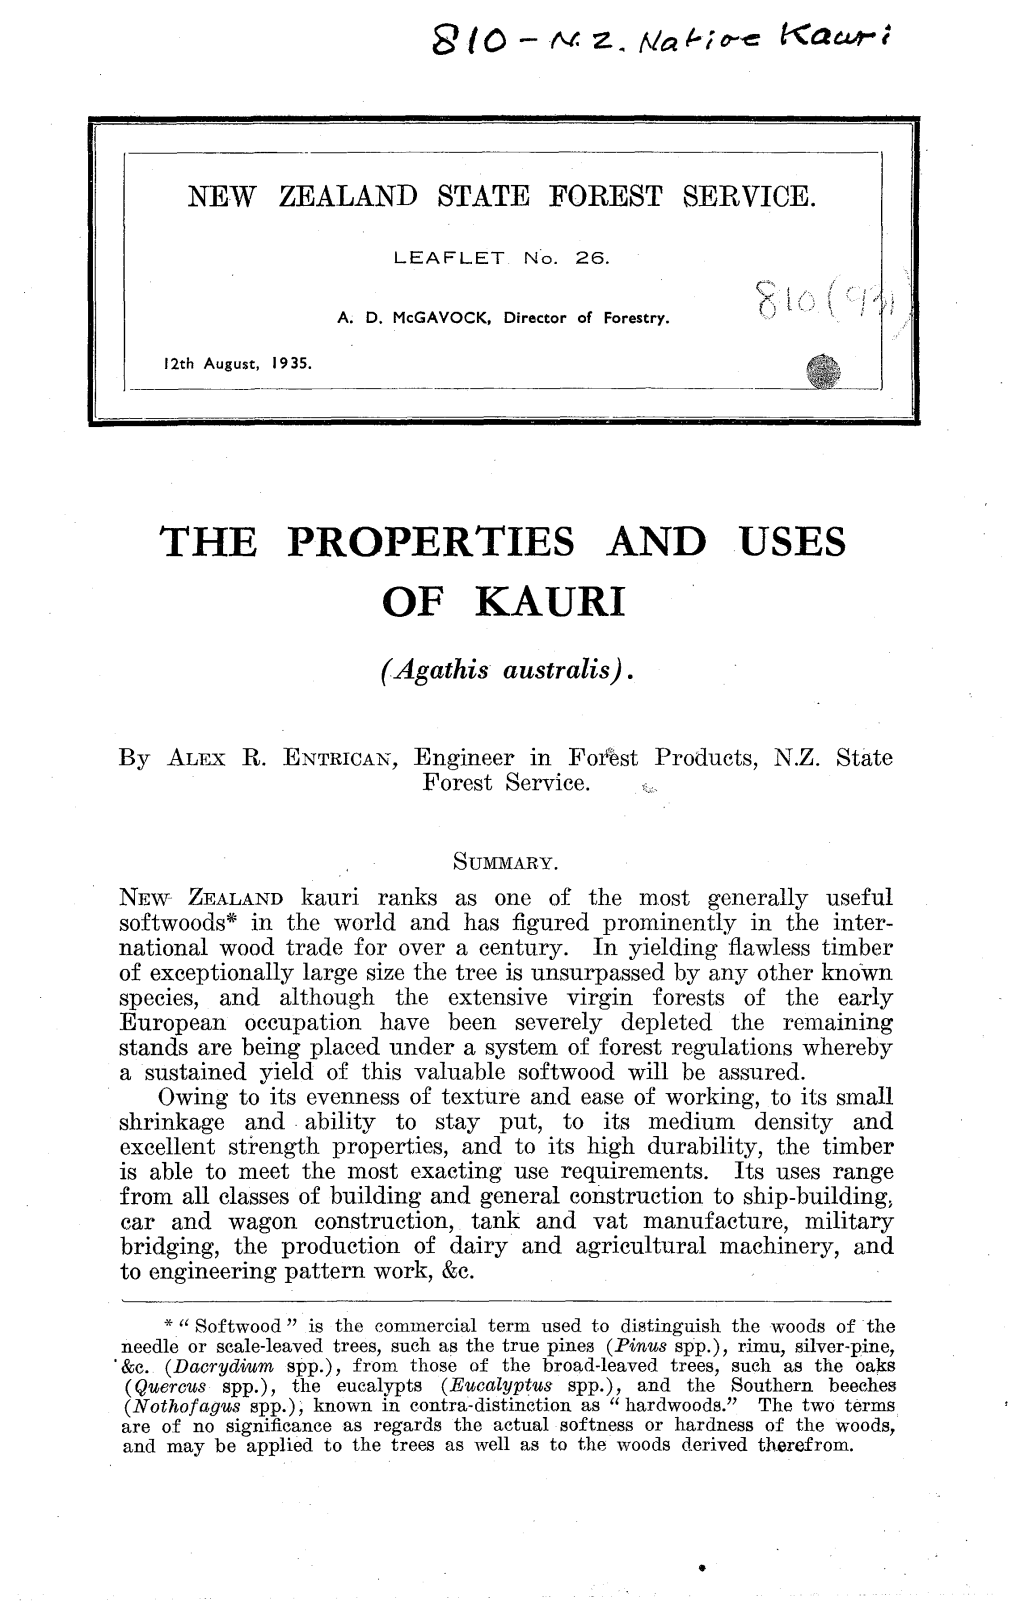 The Properties and Uses of Kadri